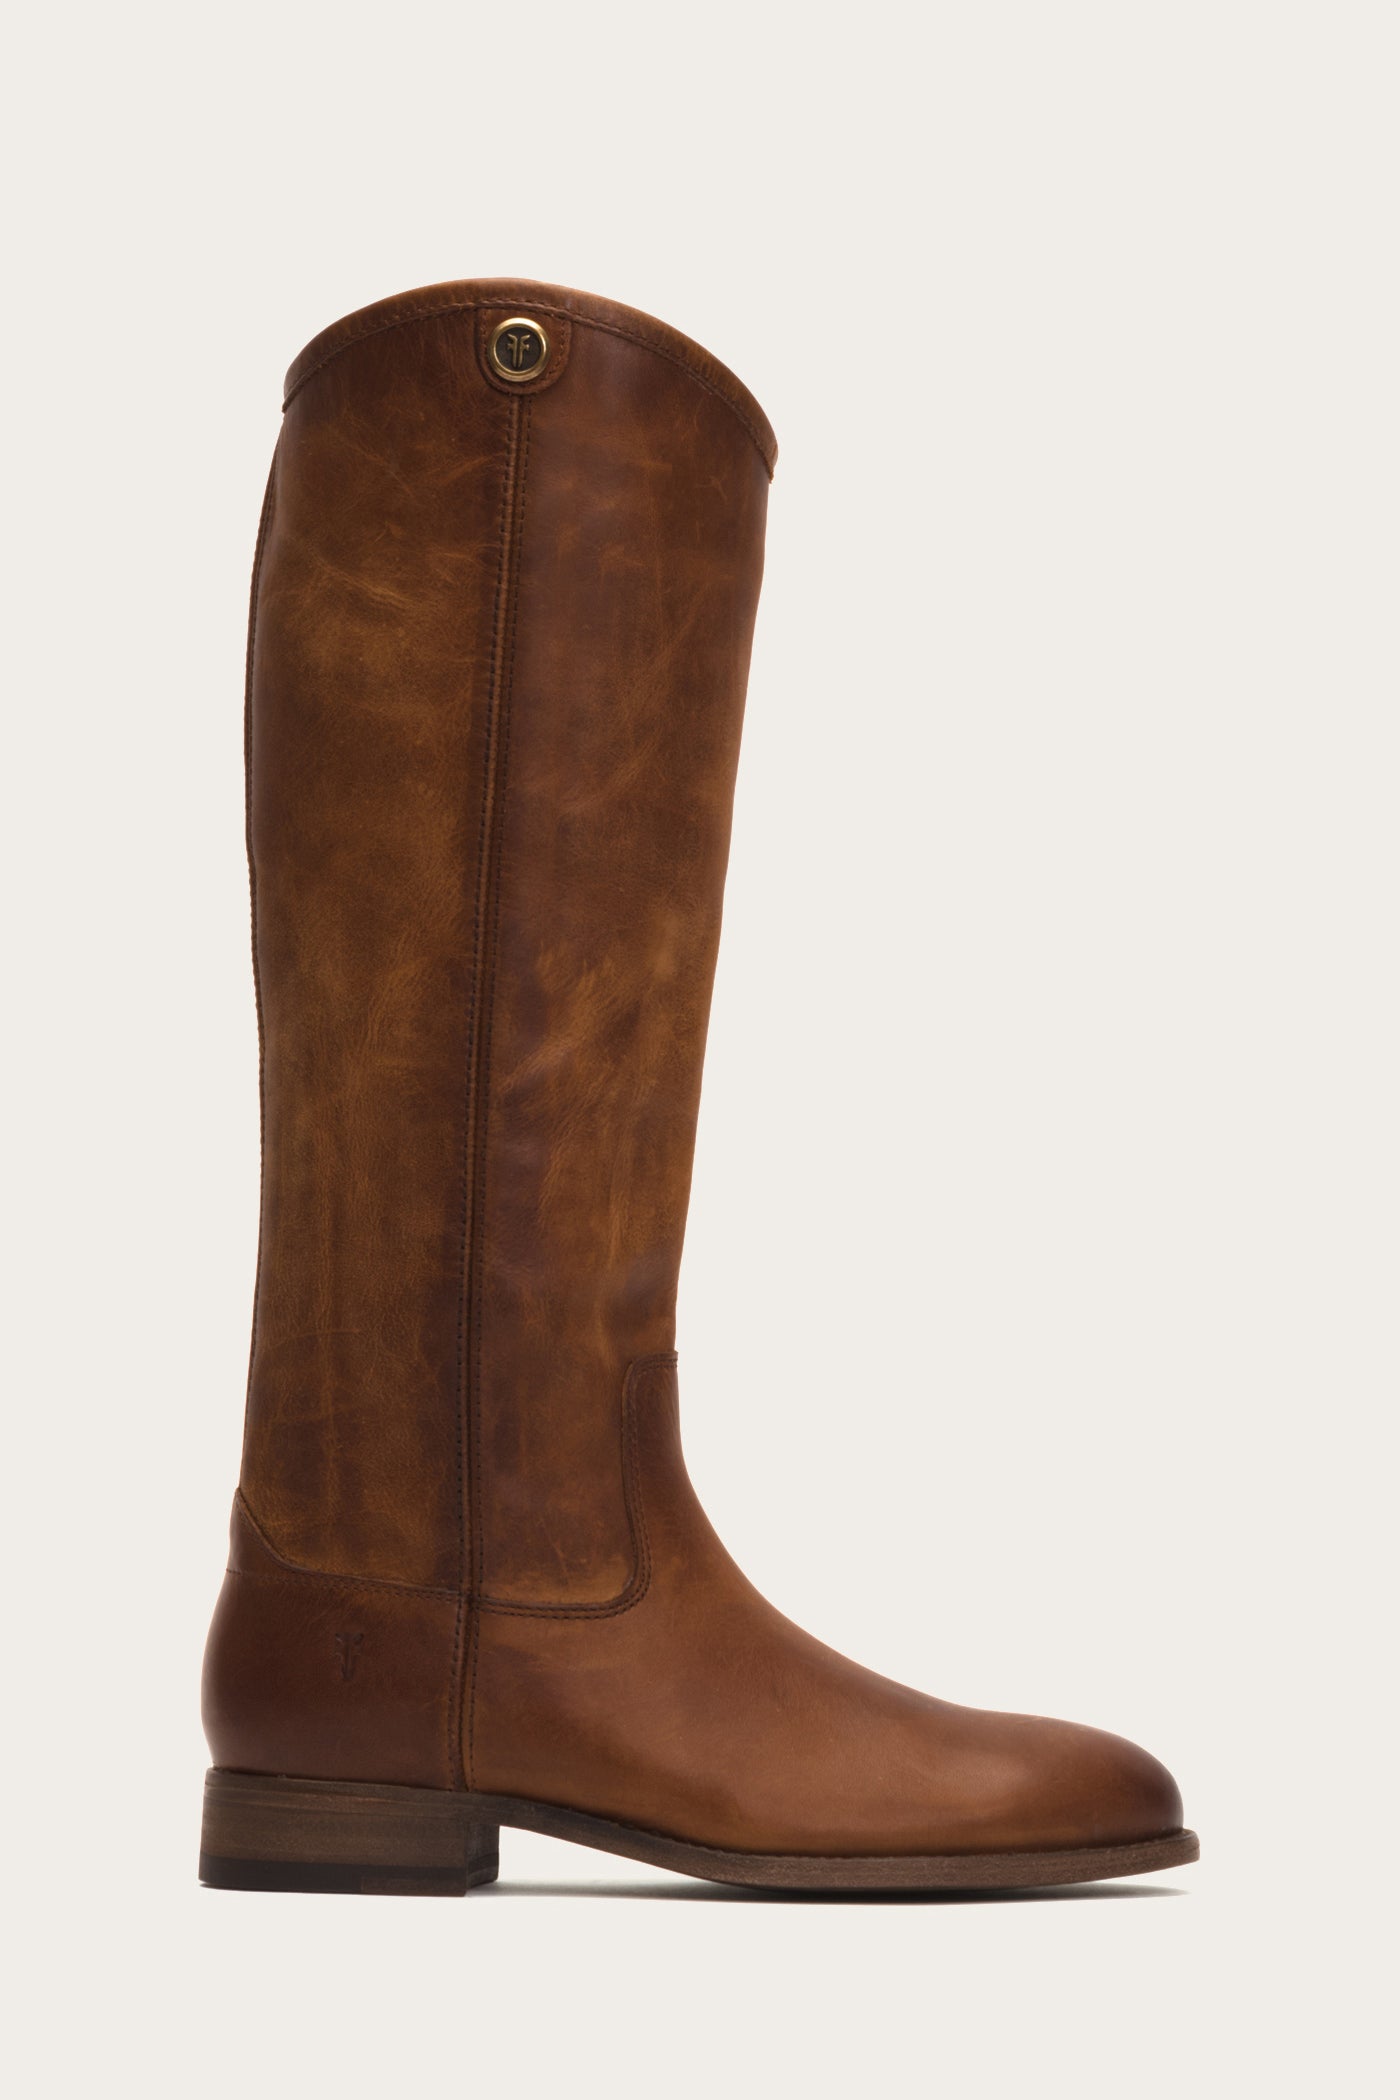 wide calf dress boots canada